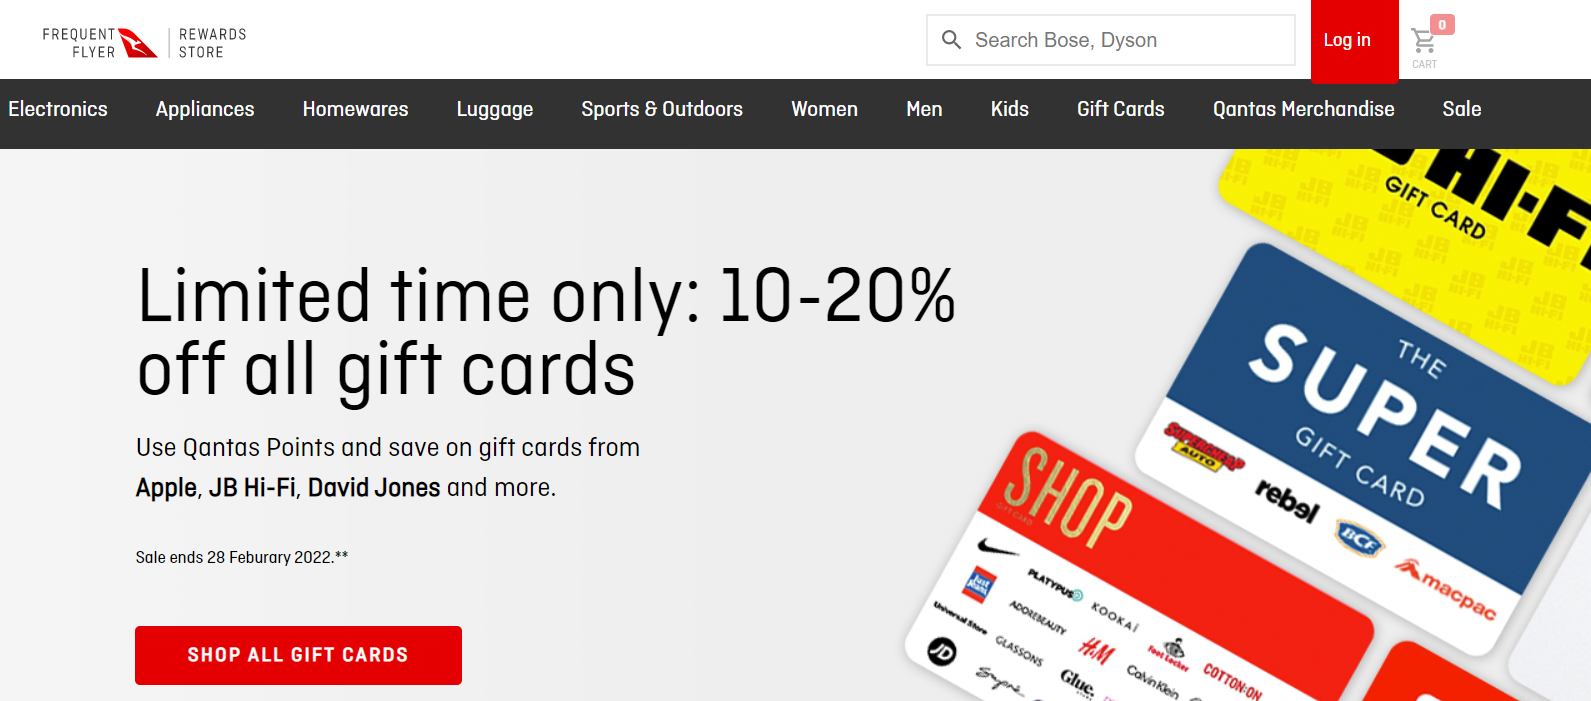 Qantas Rewards 10-20% OFF on all gift cards including Apple, JB Hi-Fi, David Jones & more